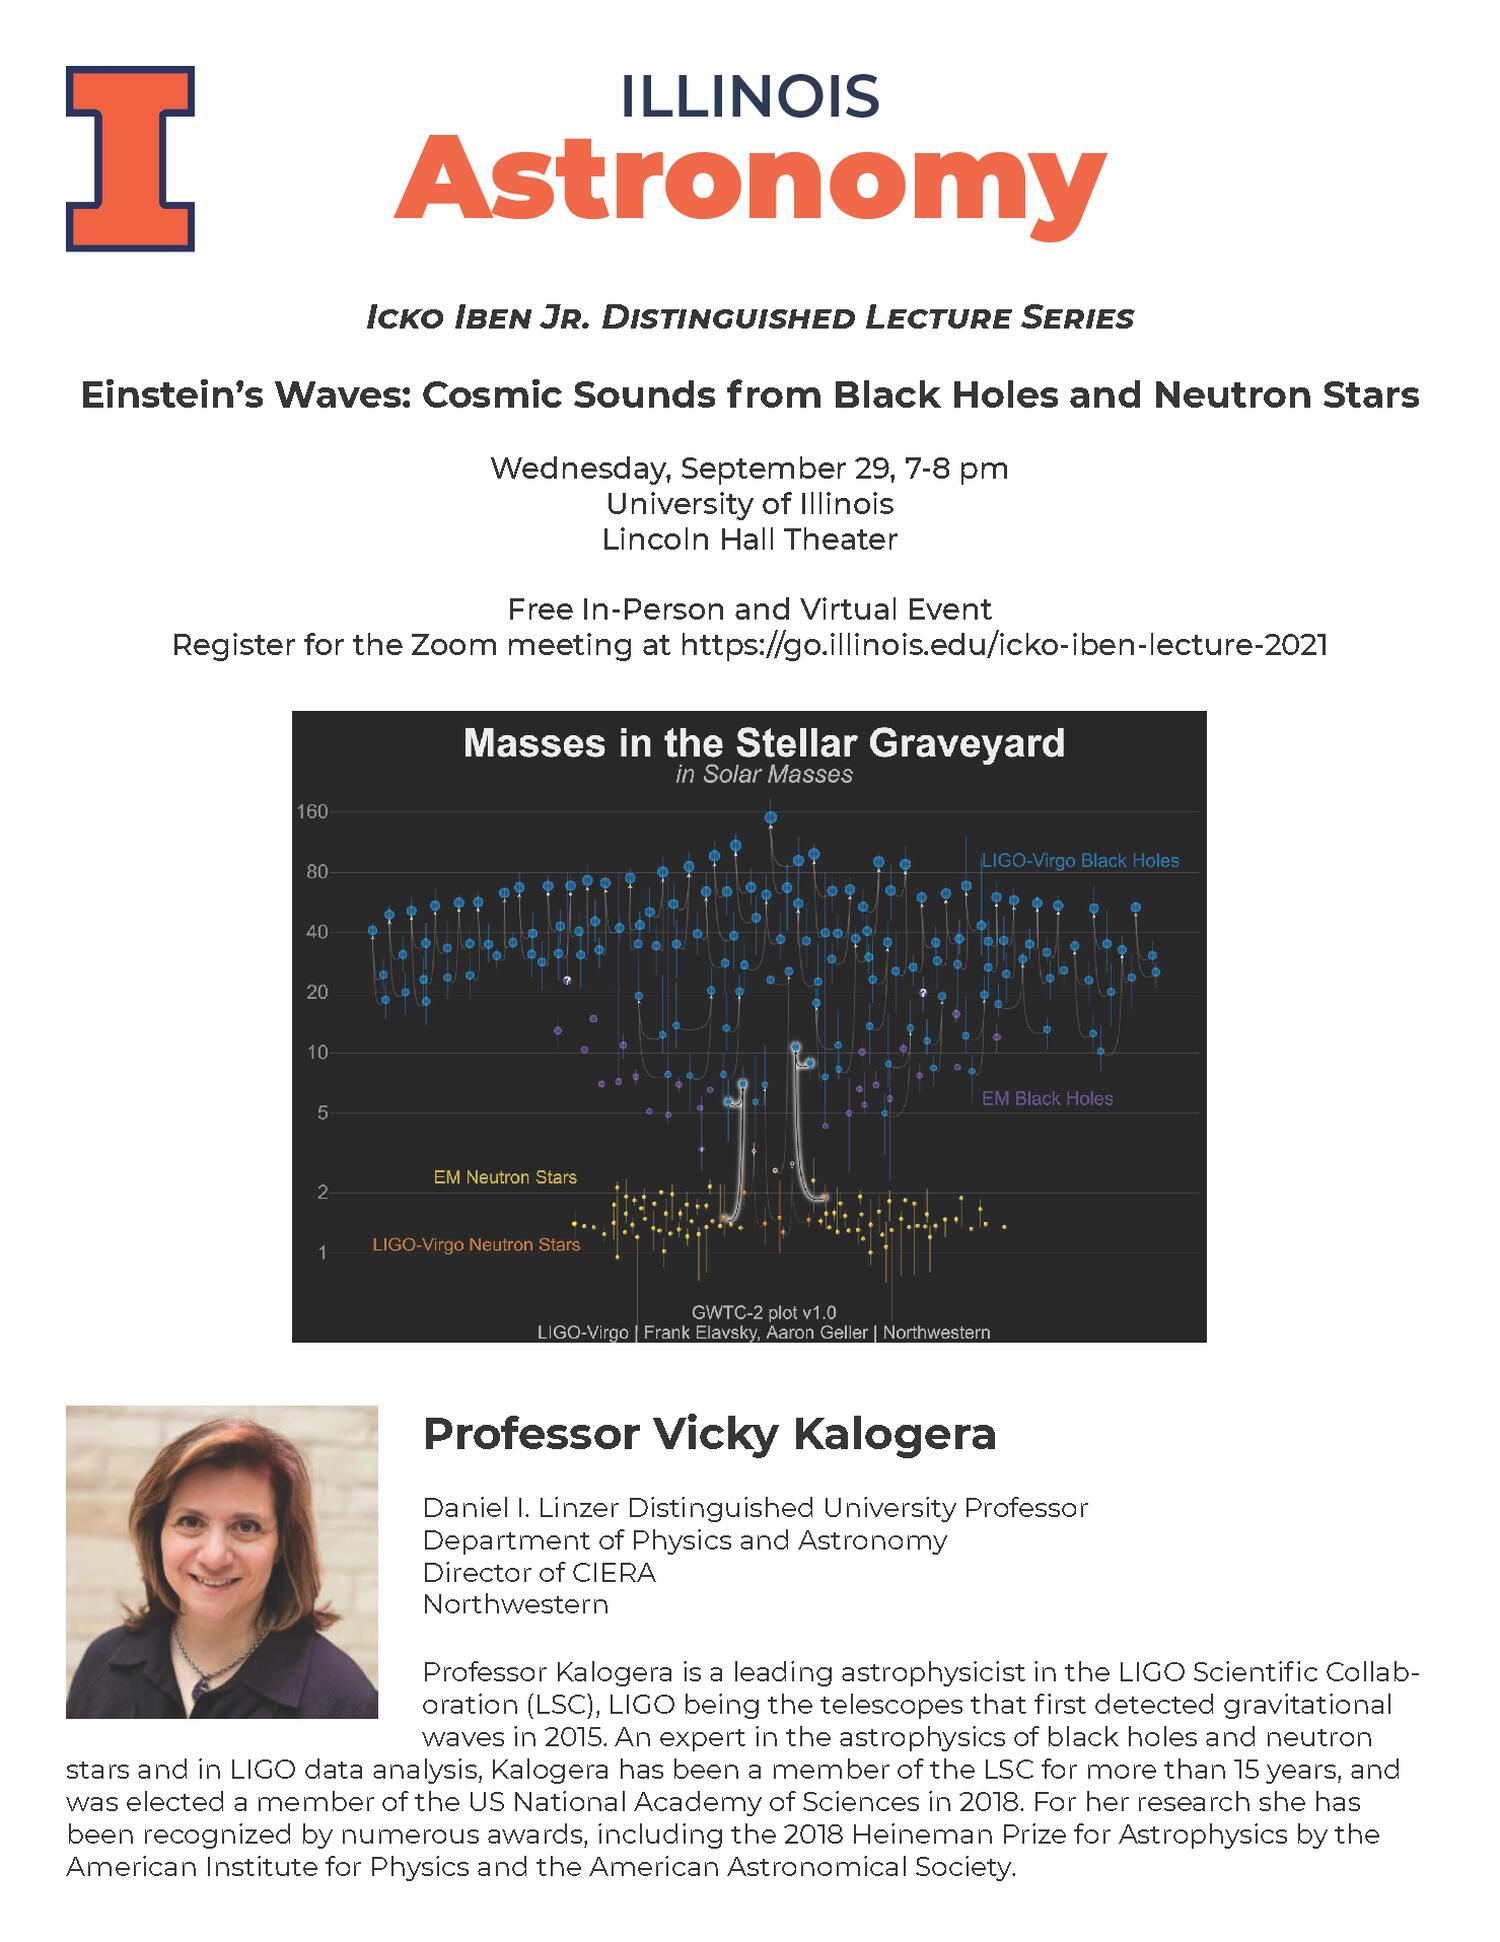 Vicky Kalogera, Northwestern, Daniel I. Linzer Distinguished University Professor